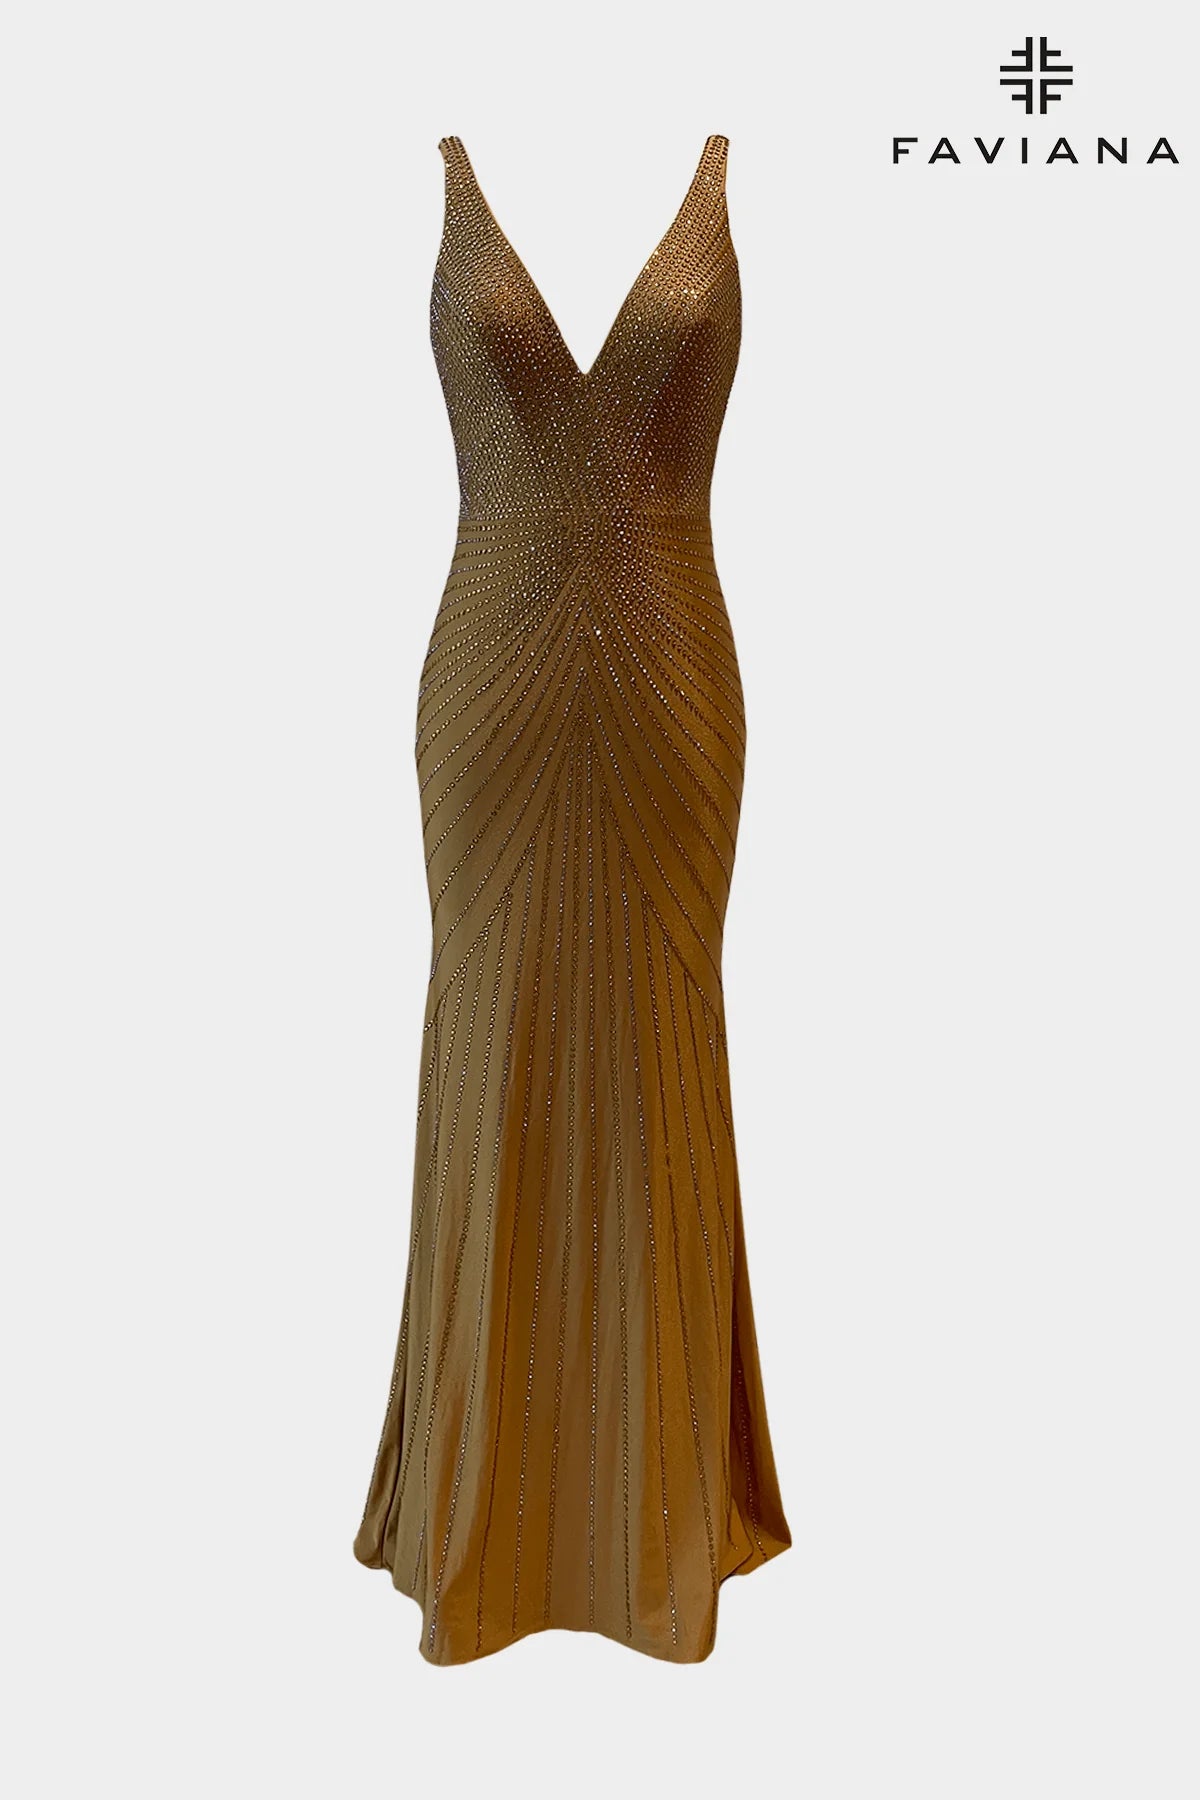 Faviana 10895 V Neck Hot Stone Dress | Gold, Black